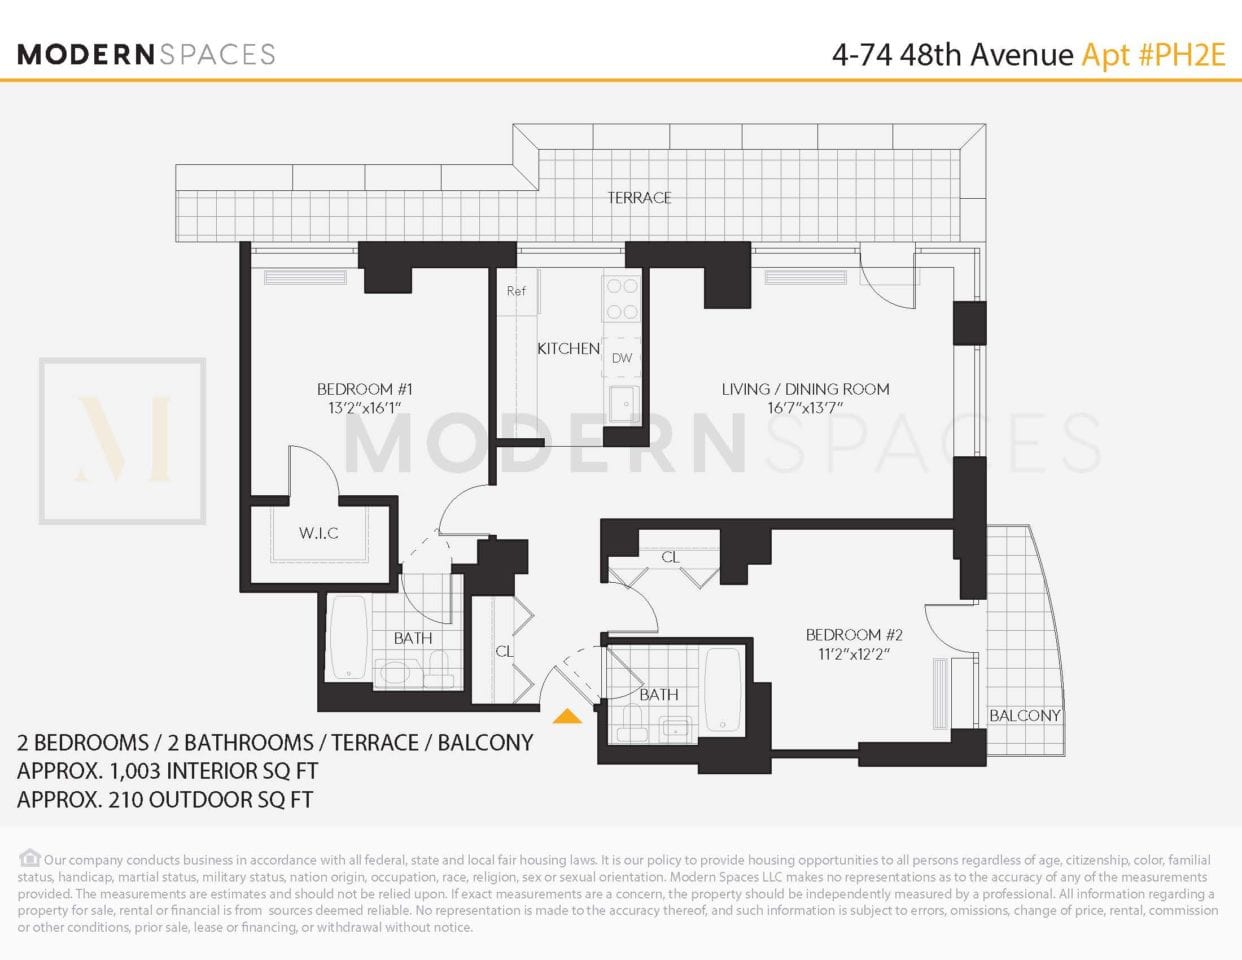 Floorplan for 4-74 48th Avenue